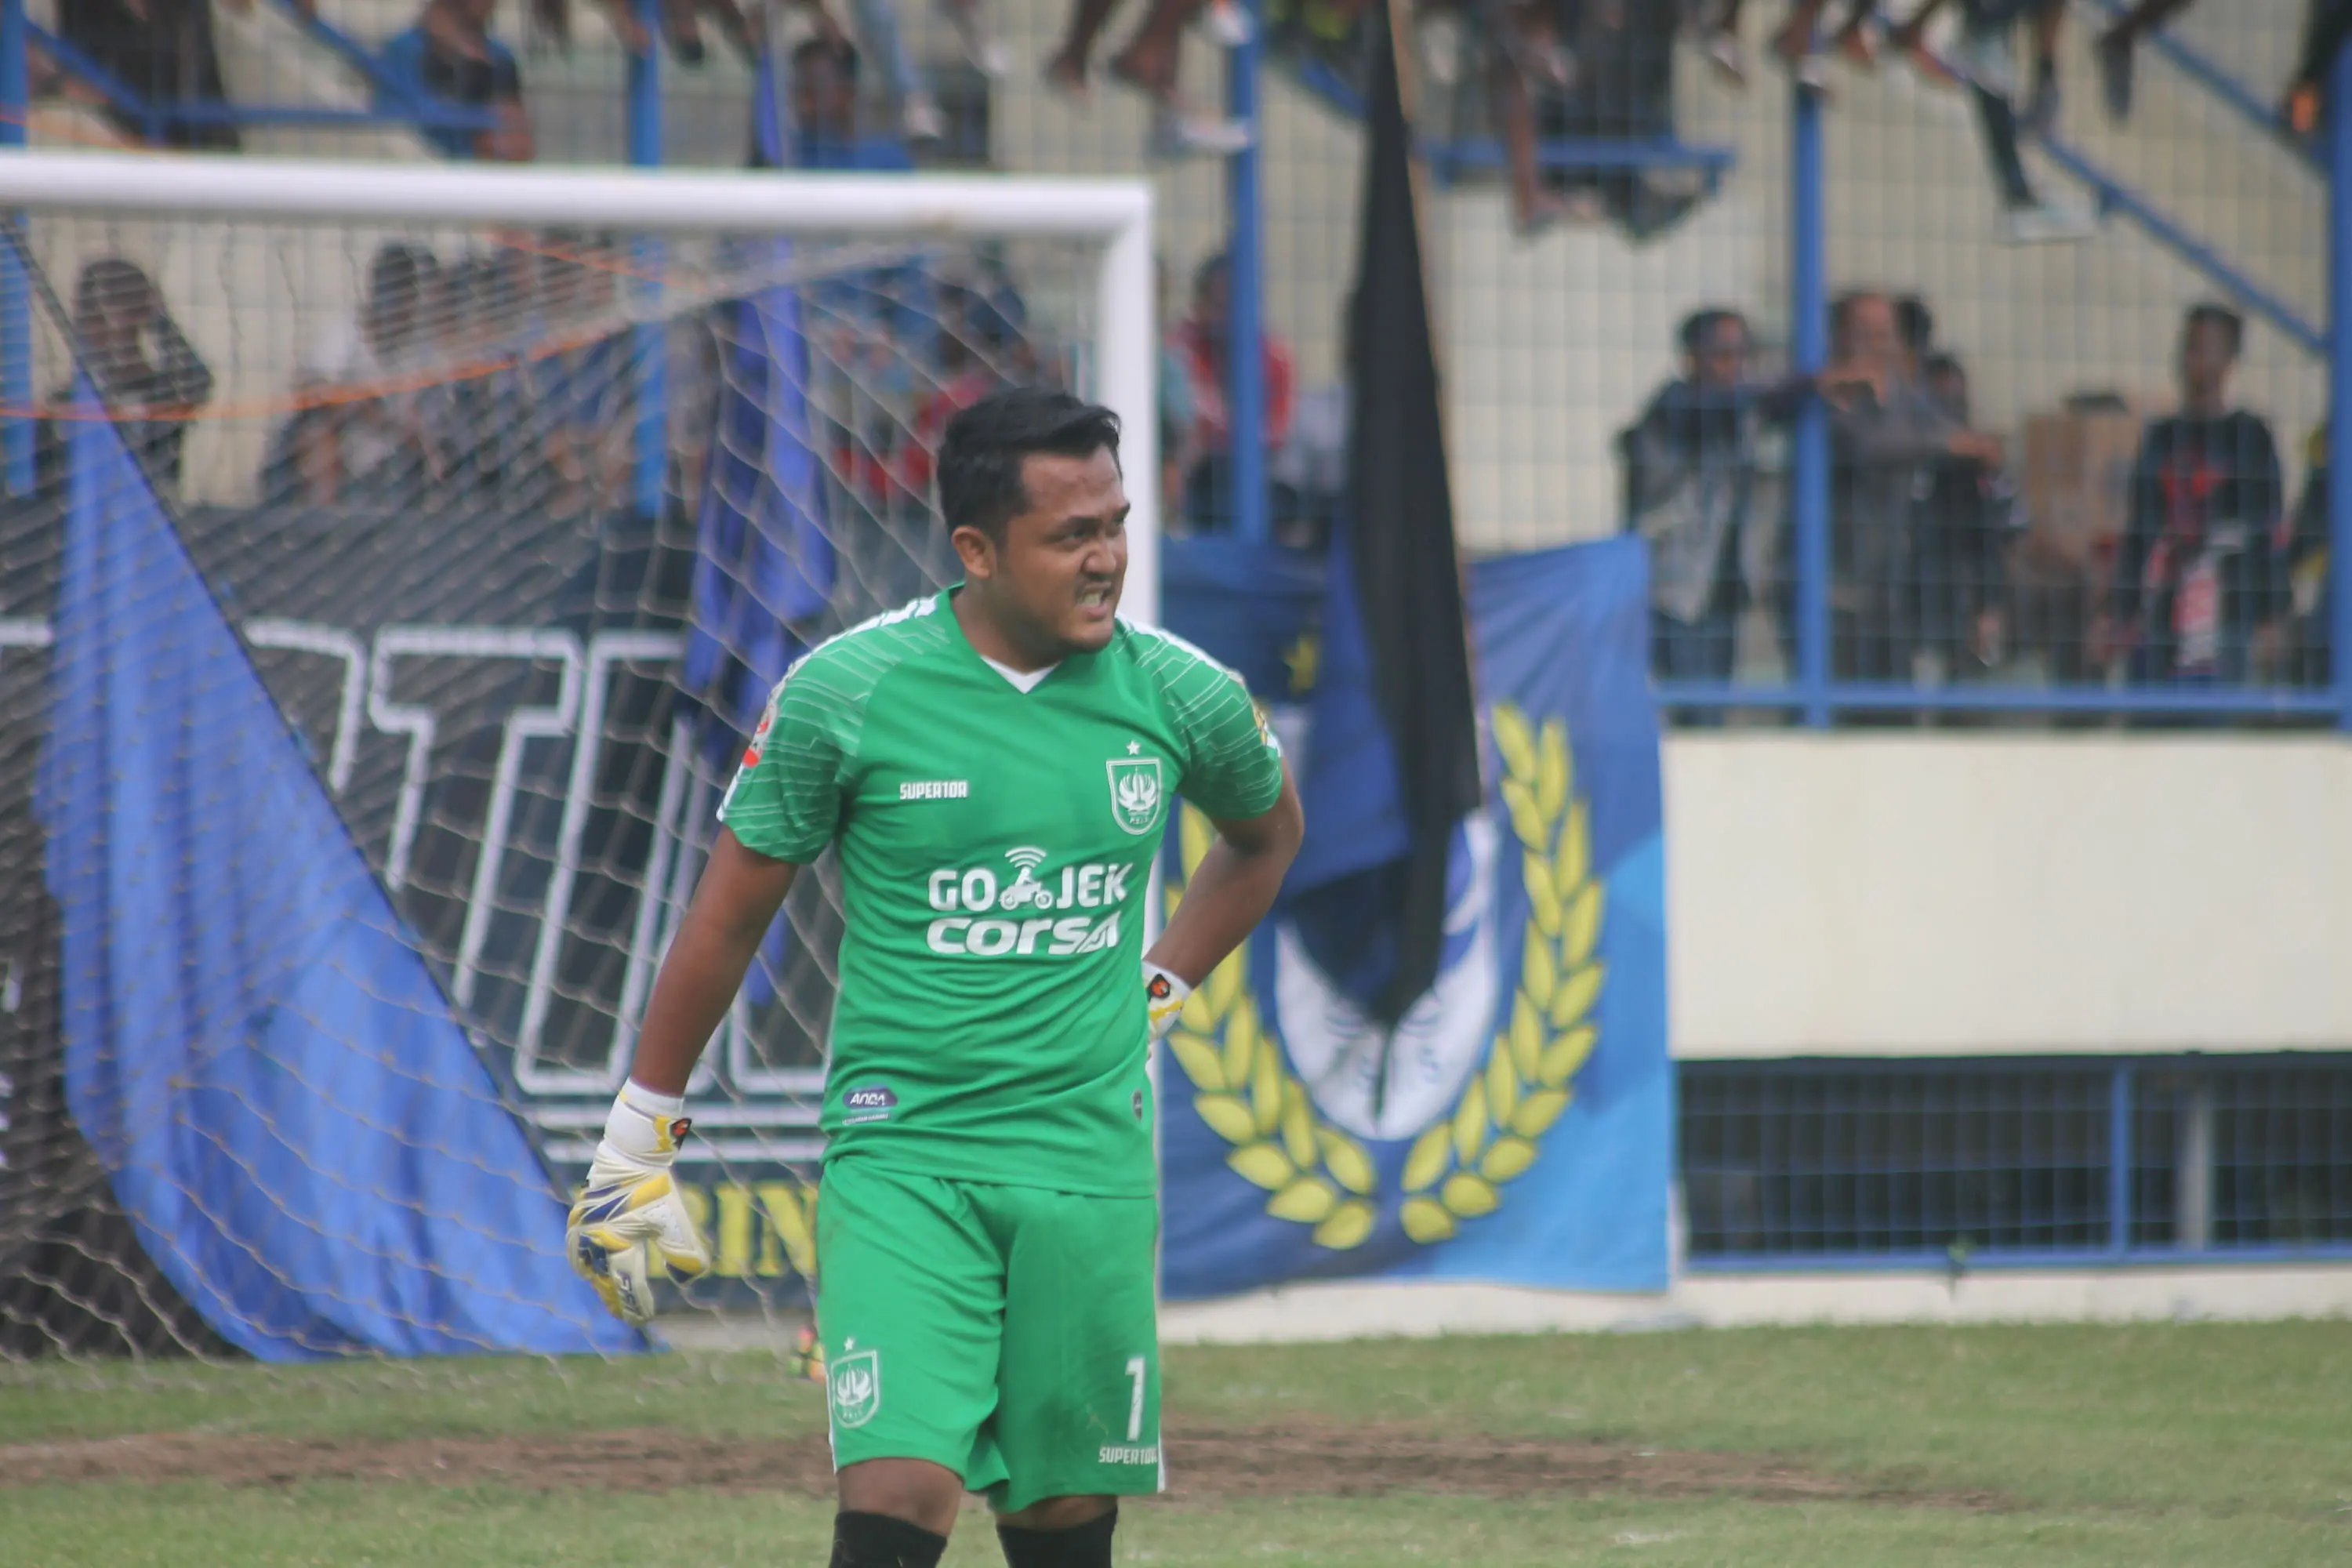 Mantan kiper Persegres Gresik United, Aji Saka, mengikuti seleksi di PSIS Semarang. (Bola.com/Ronald Seger)